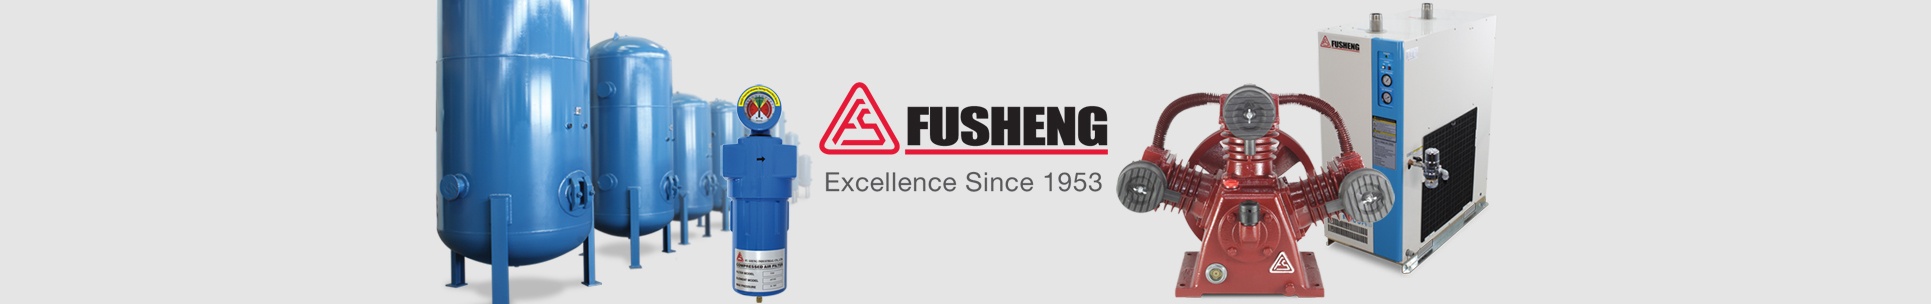 Fusheng - Excellence Since 1953